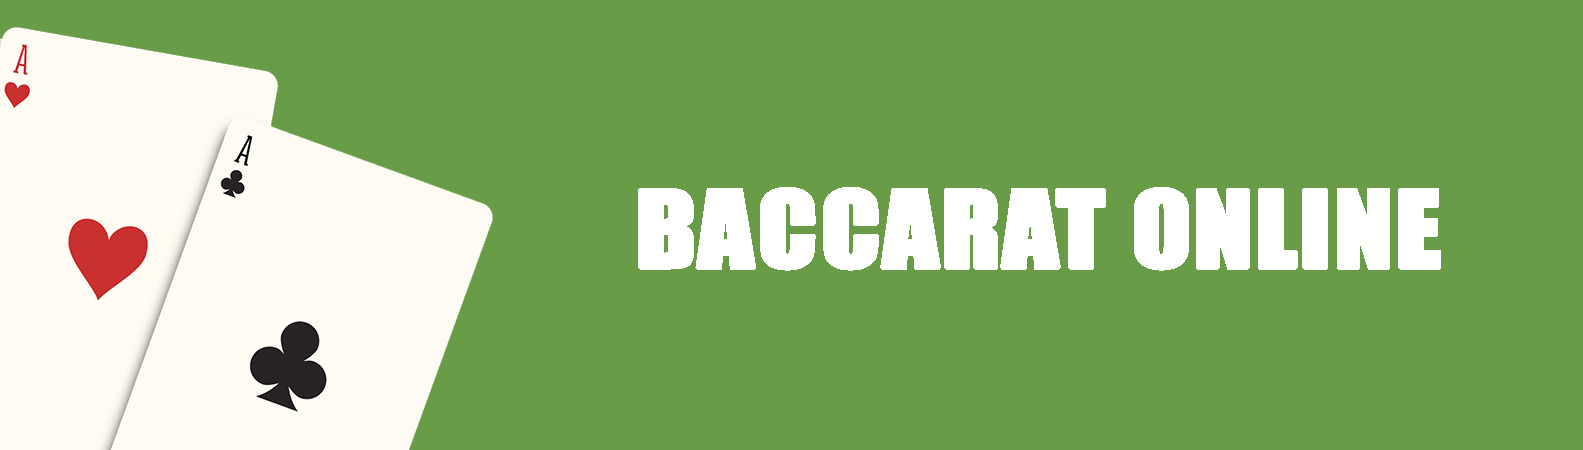 Baccarat Online Guide